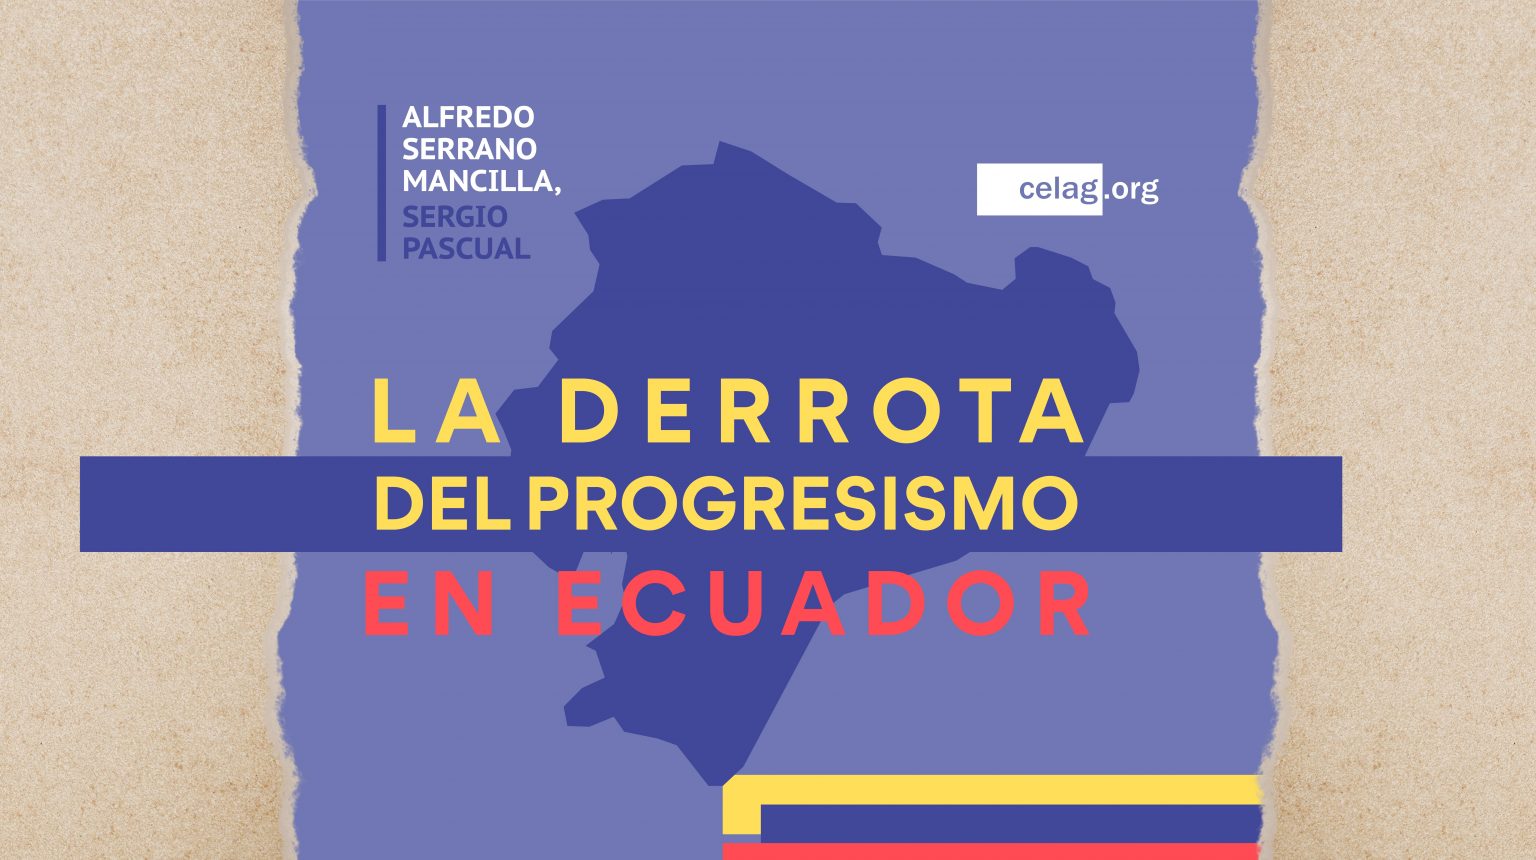 La derrota del progresismo en Ecuador